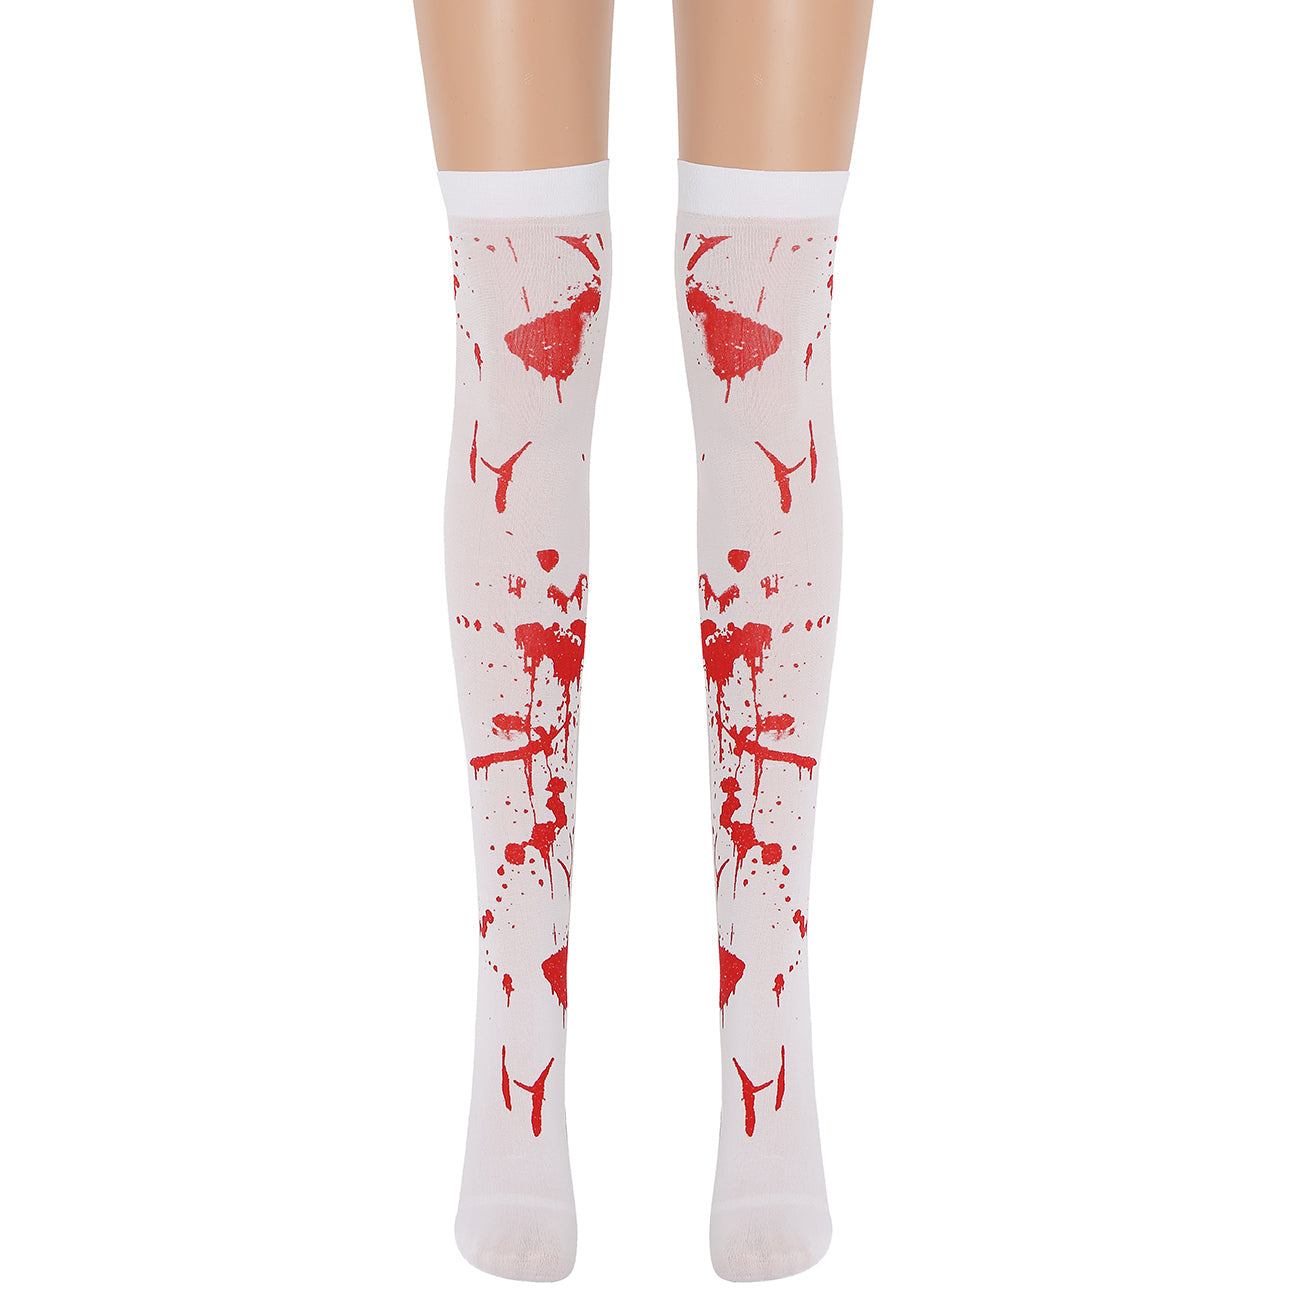 Cosplay over the knee socks women's halloween stockings